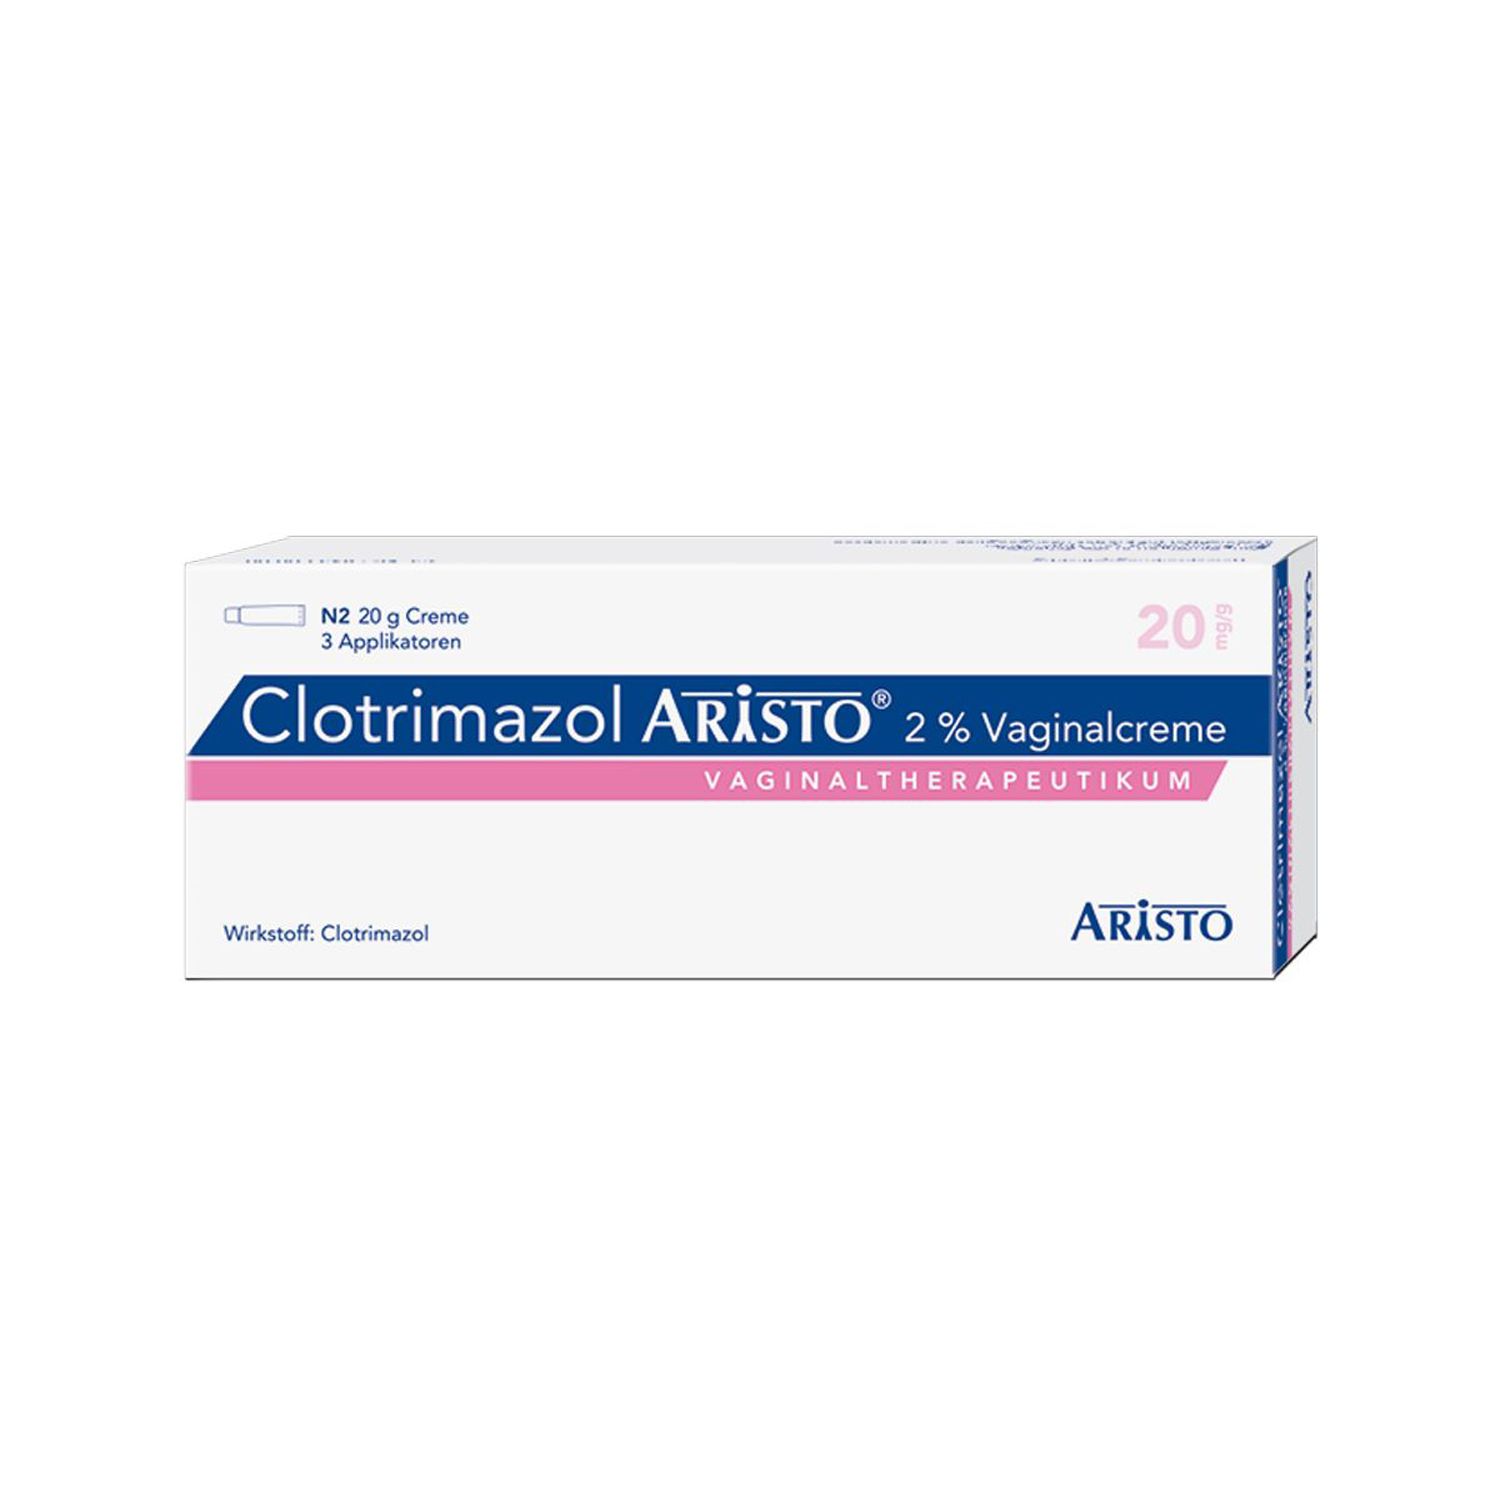 Clotrimazol Aristo® 2% Vaginalcreme